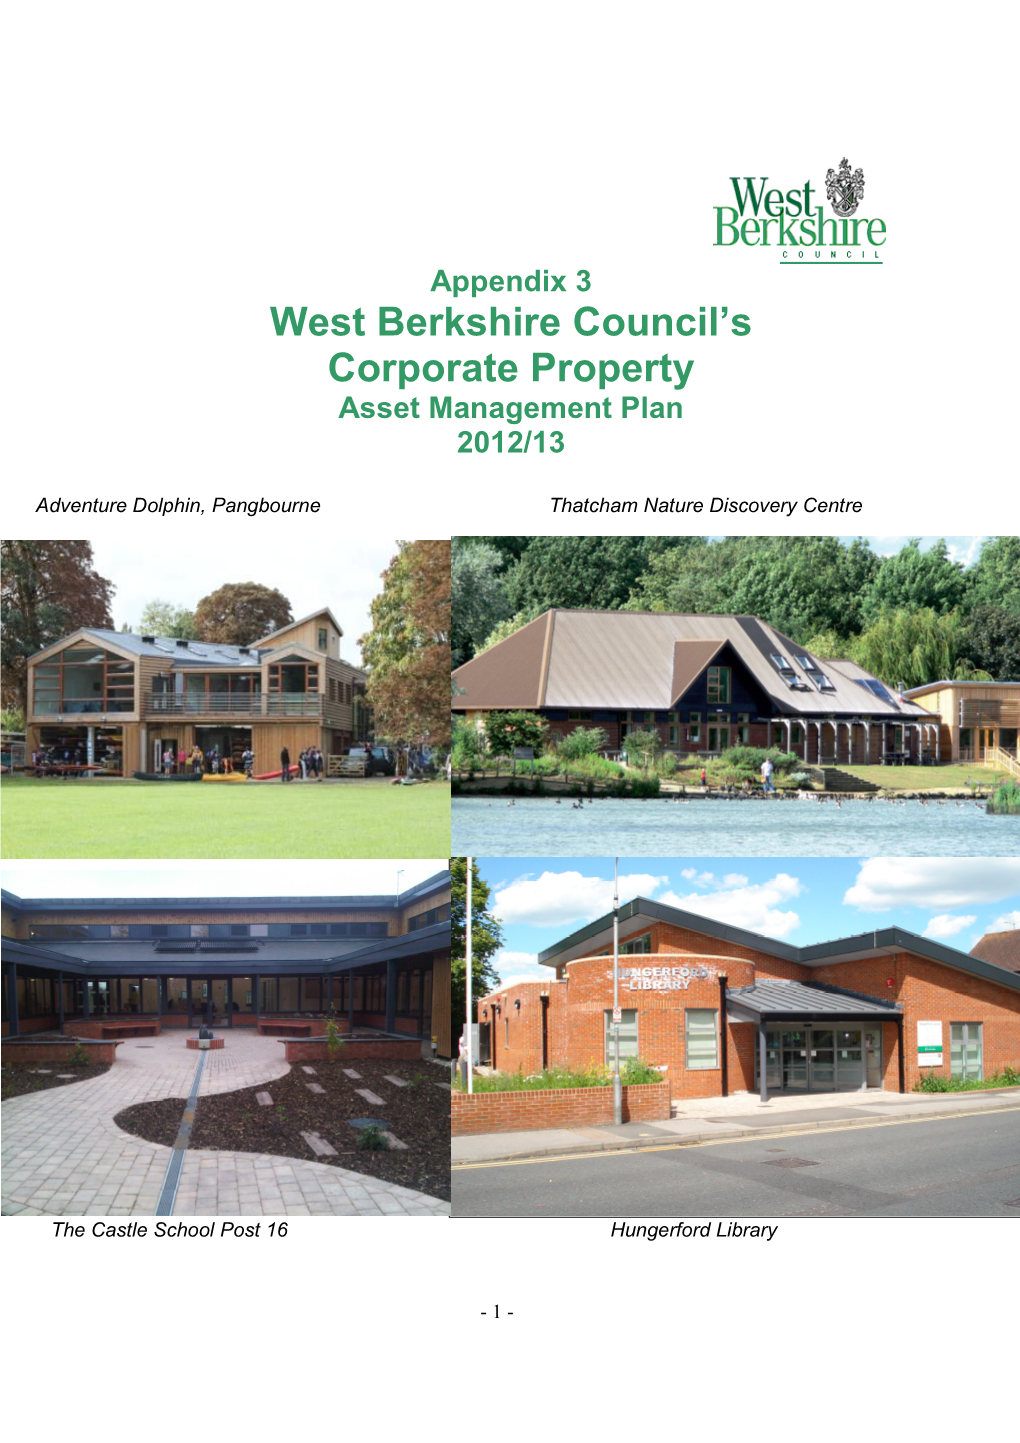 West Berkshire Council's Corporate Property